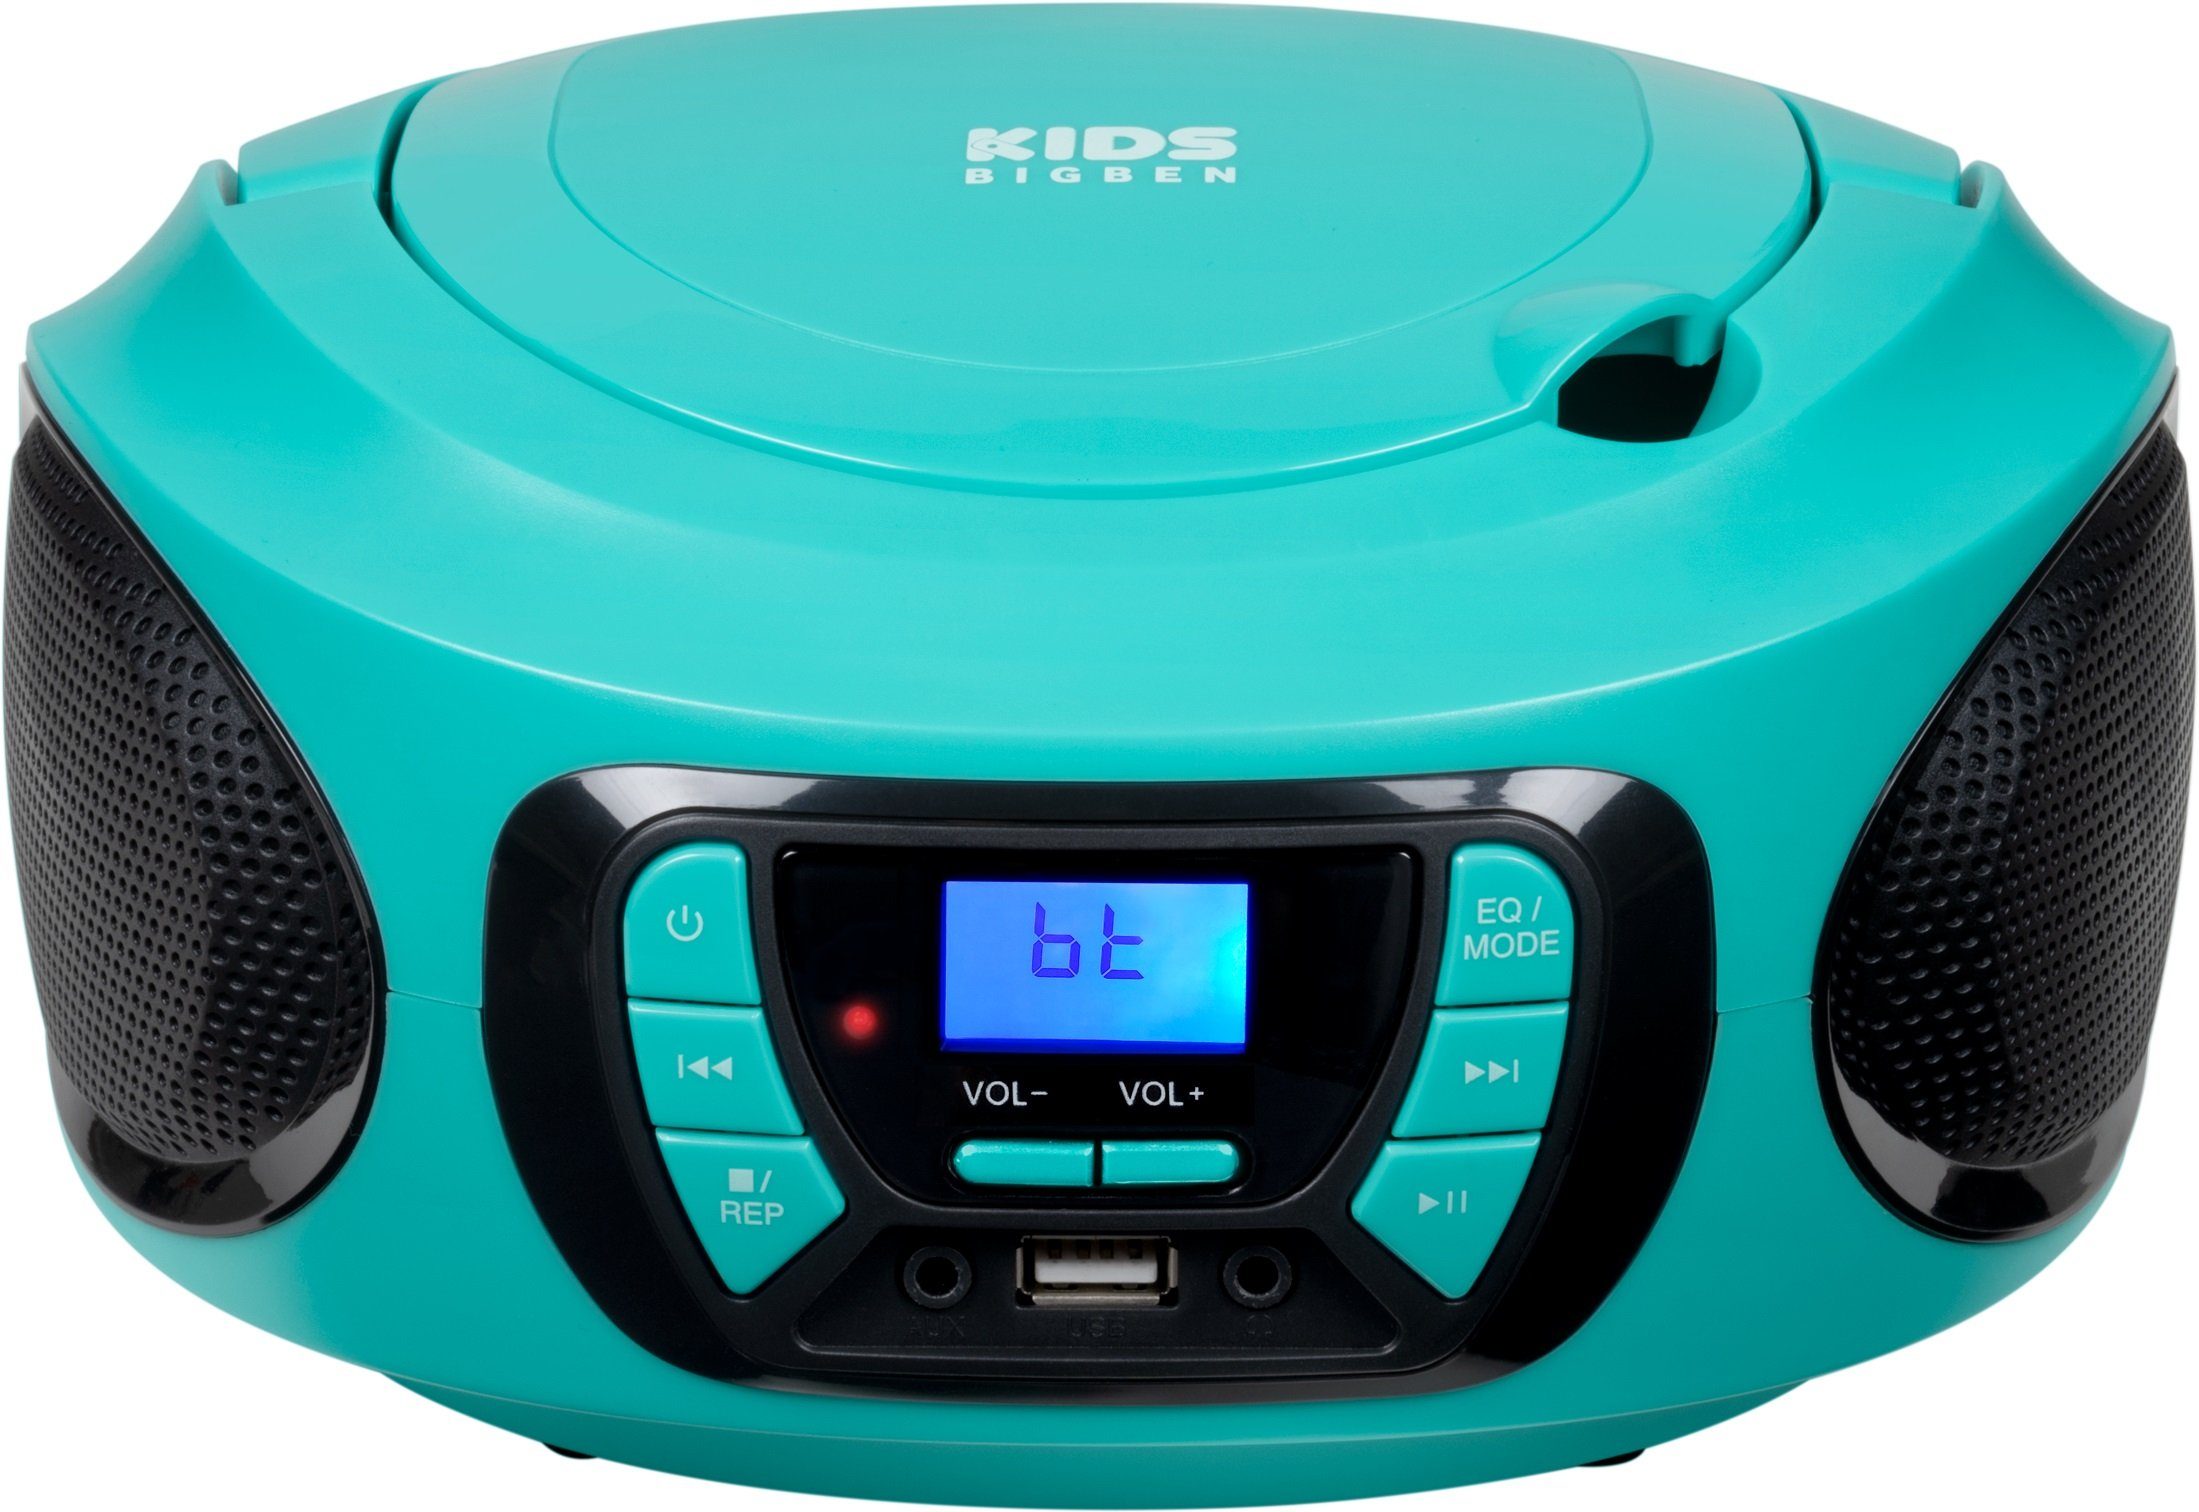 BigBen Kids Tragbares CD/Radio AU387315 USB/BT CD-Radiorecorder blau (FM-Tuner)